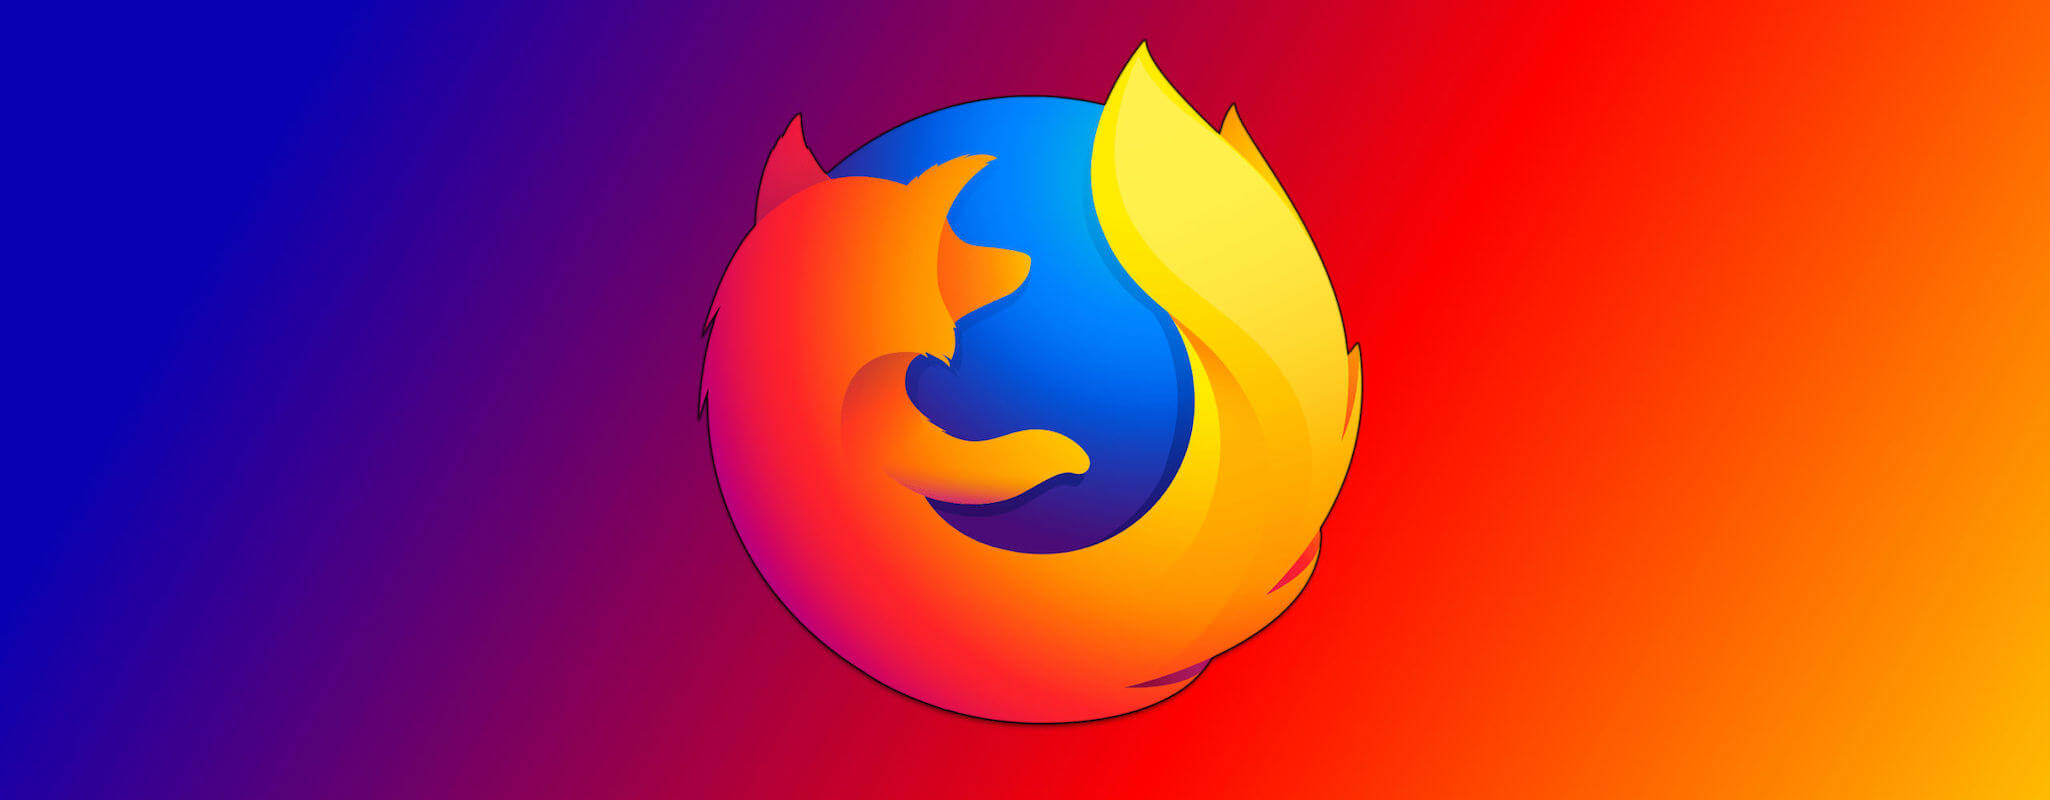 Firefox Usage is Still Growing